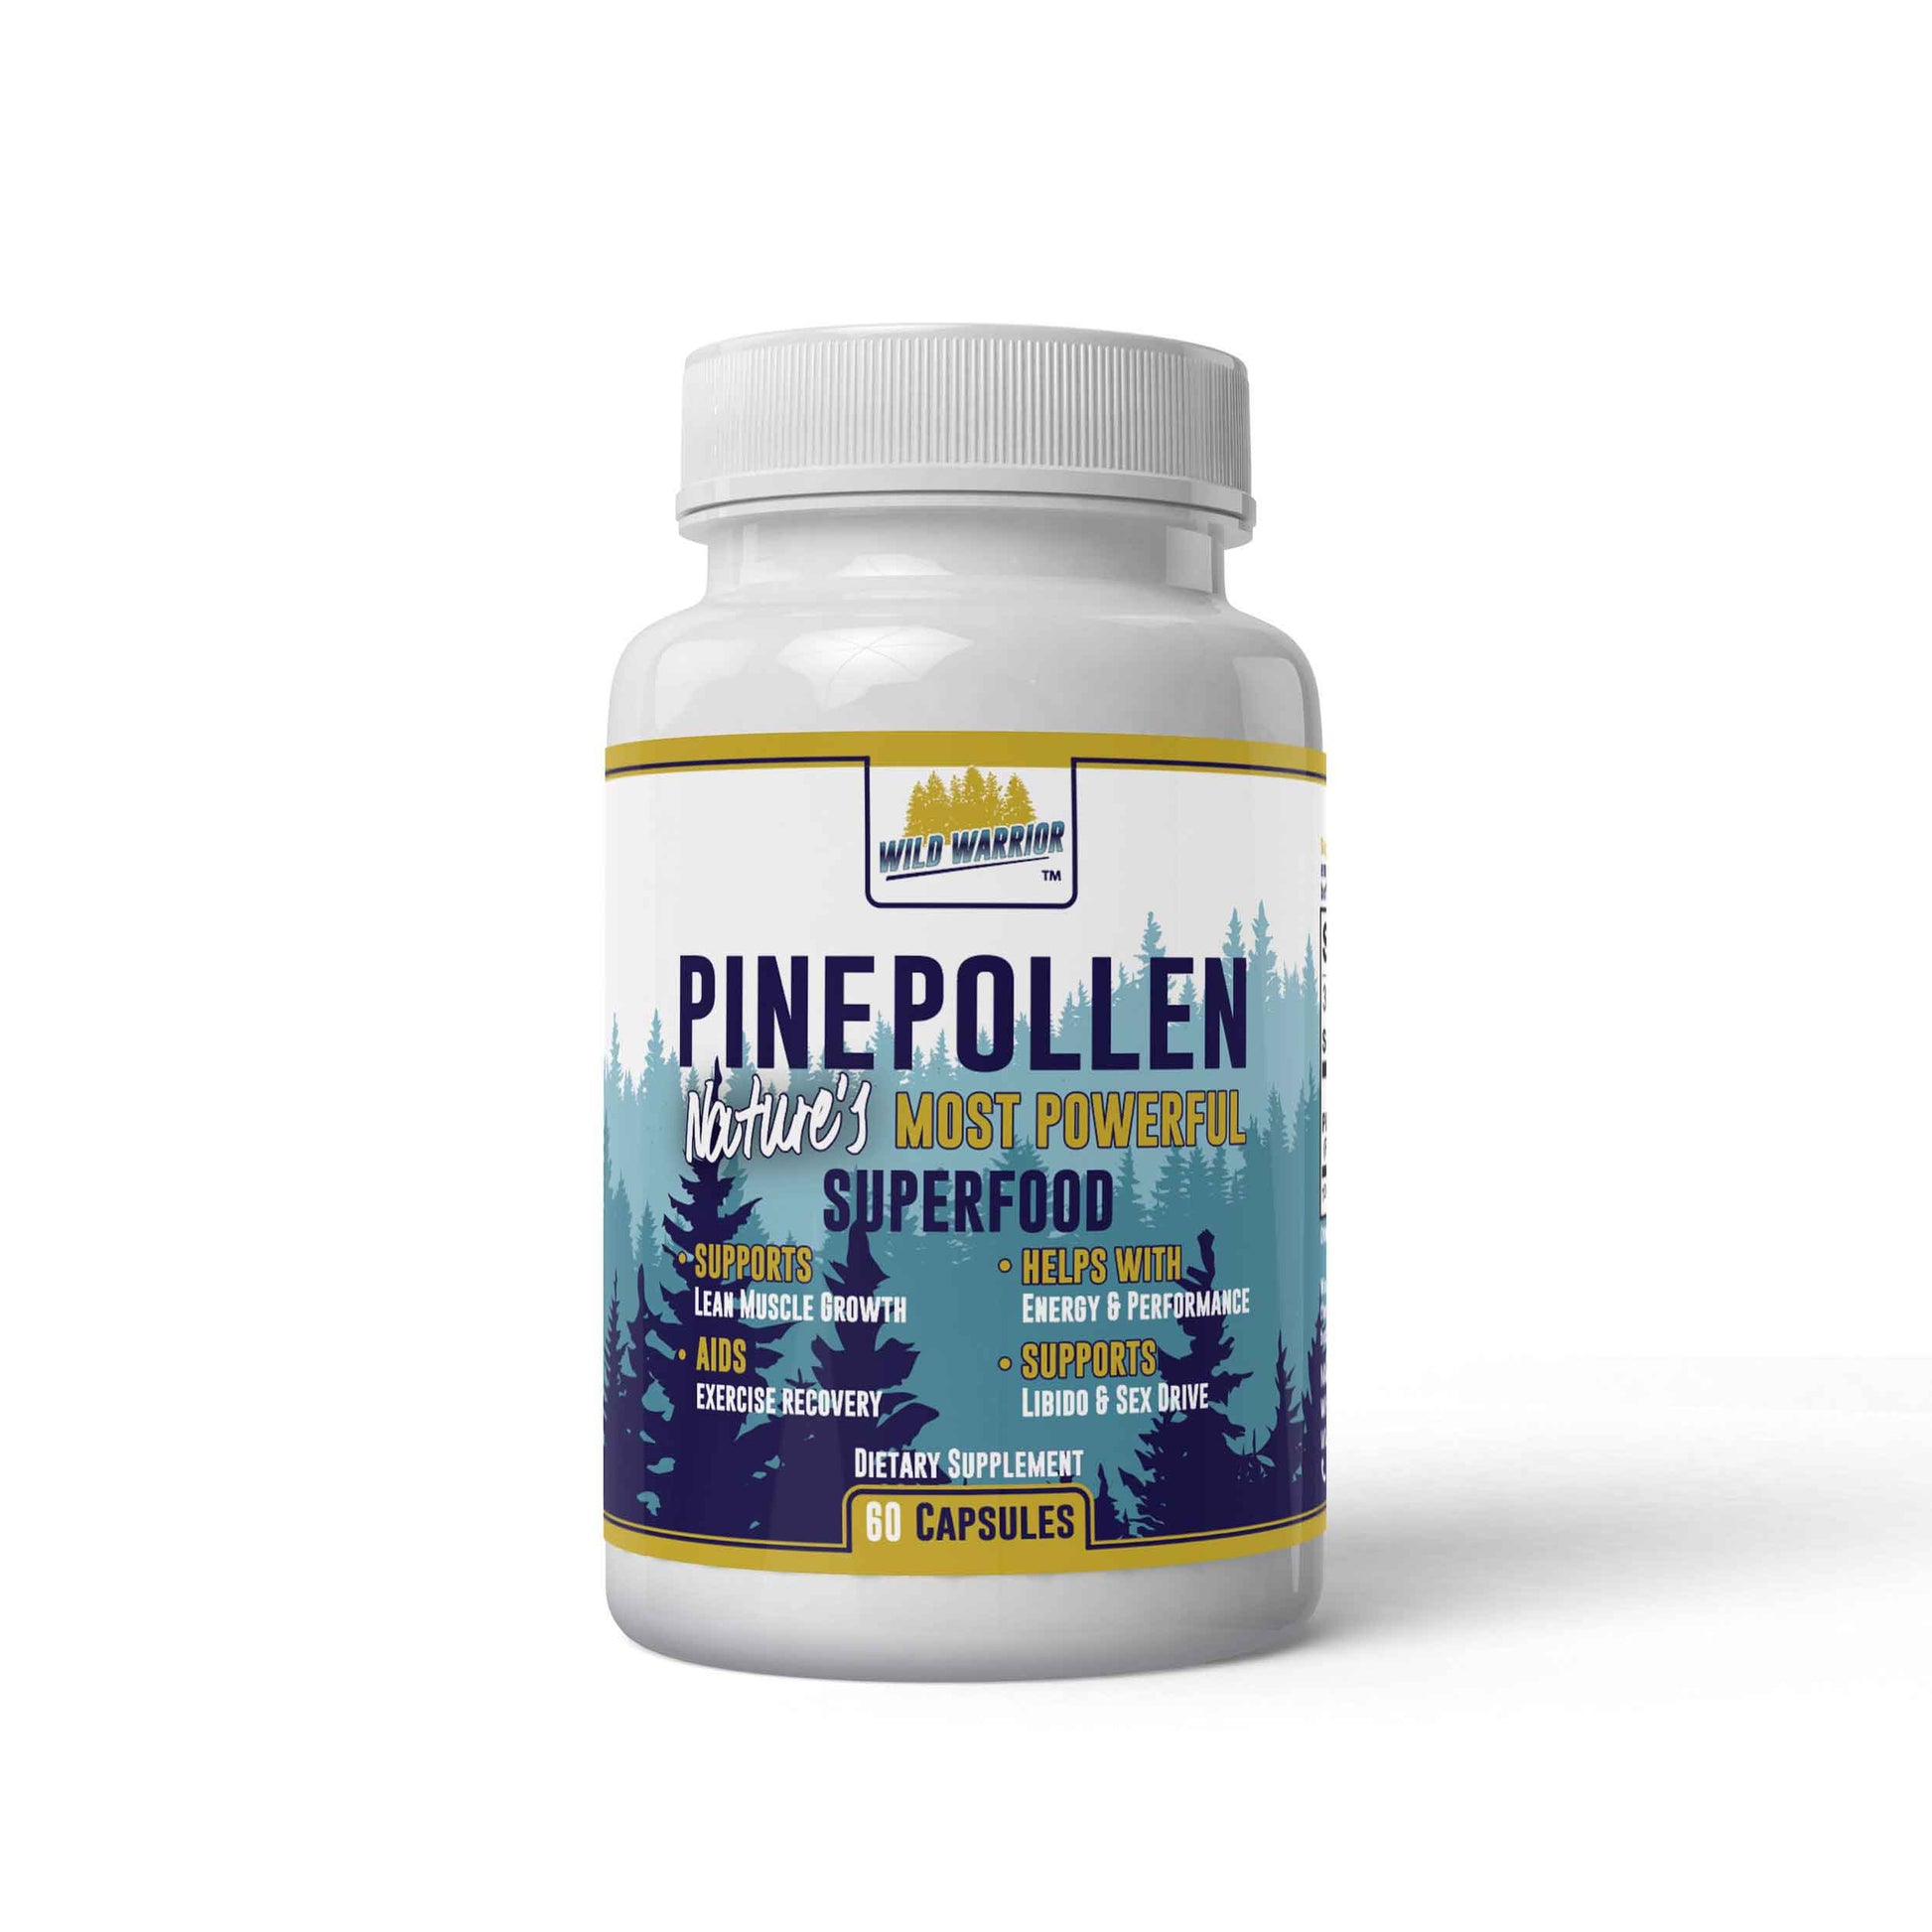 Pine Pollen Superfood Capsules